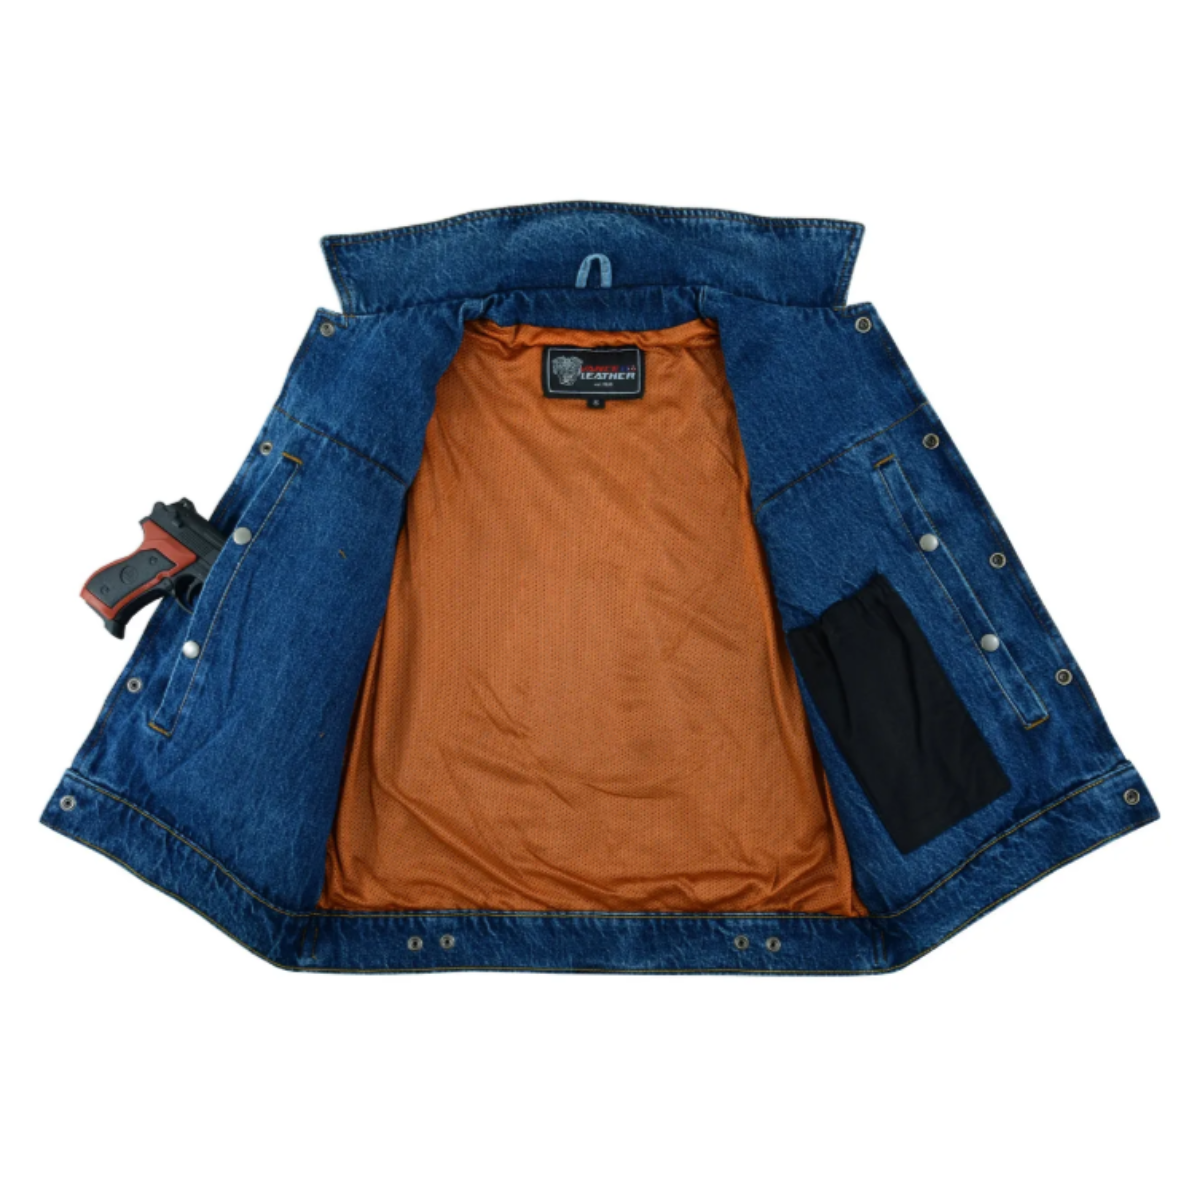 A Vance Leather Men's Denim Vest with Collar with an orange pocket.